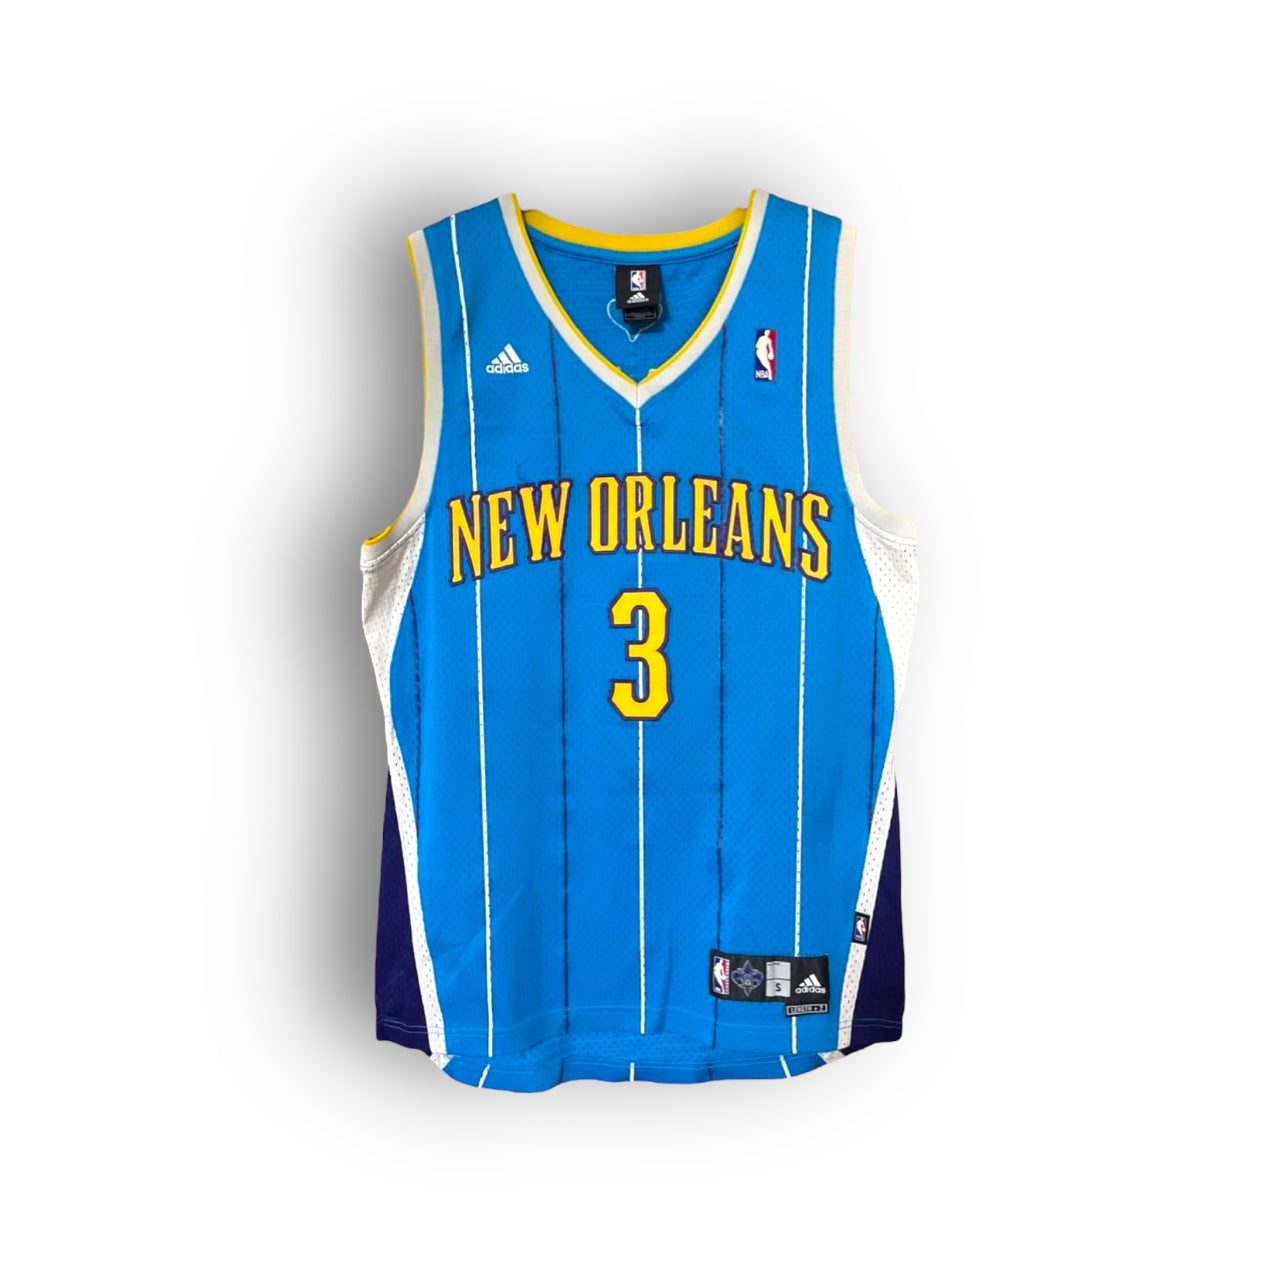 Chris Paul New Orleans Hornets Away Adidas Swingman Jersey in Blue - Hoop Jersey Store